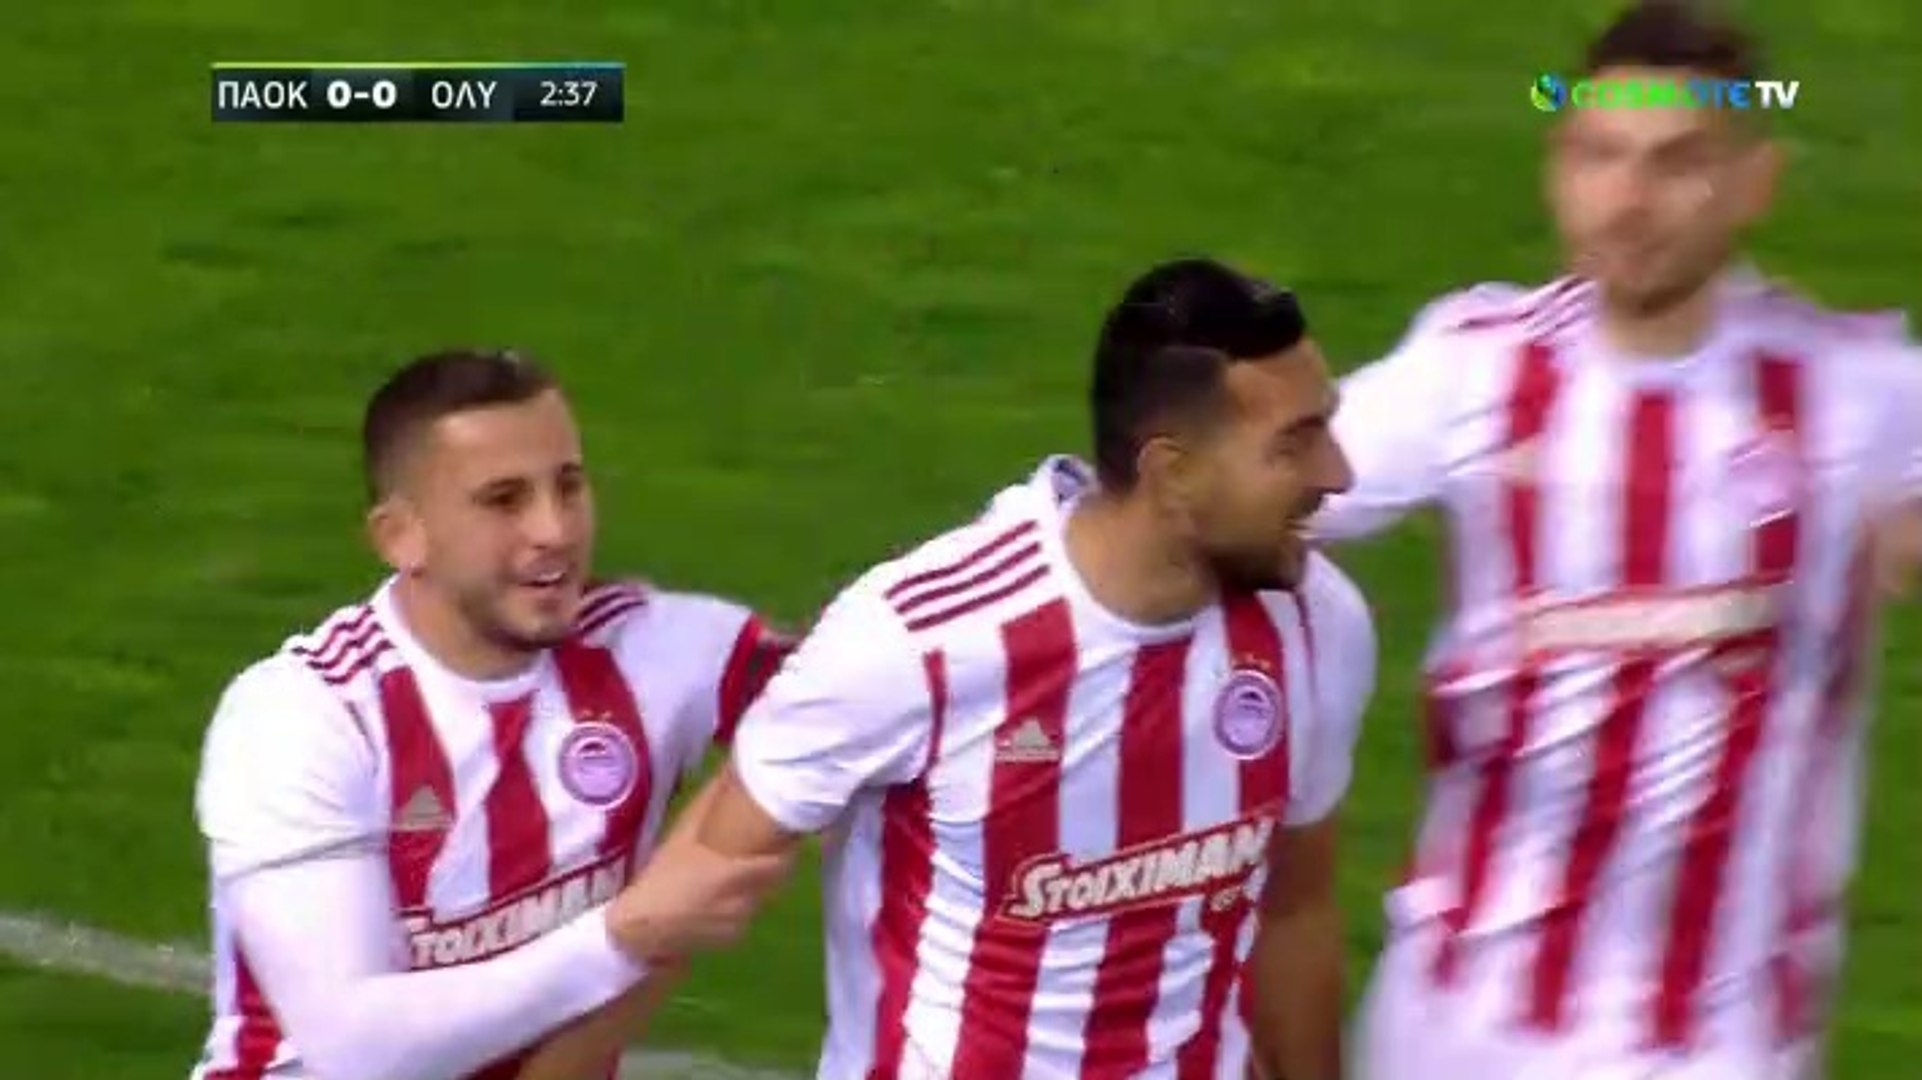 0-1 Hassan Goal - PAOK 0-1 Olympiakos 04.03.20 [HD] - video Dailymotion